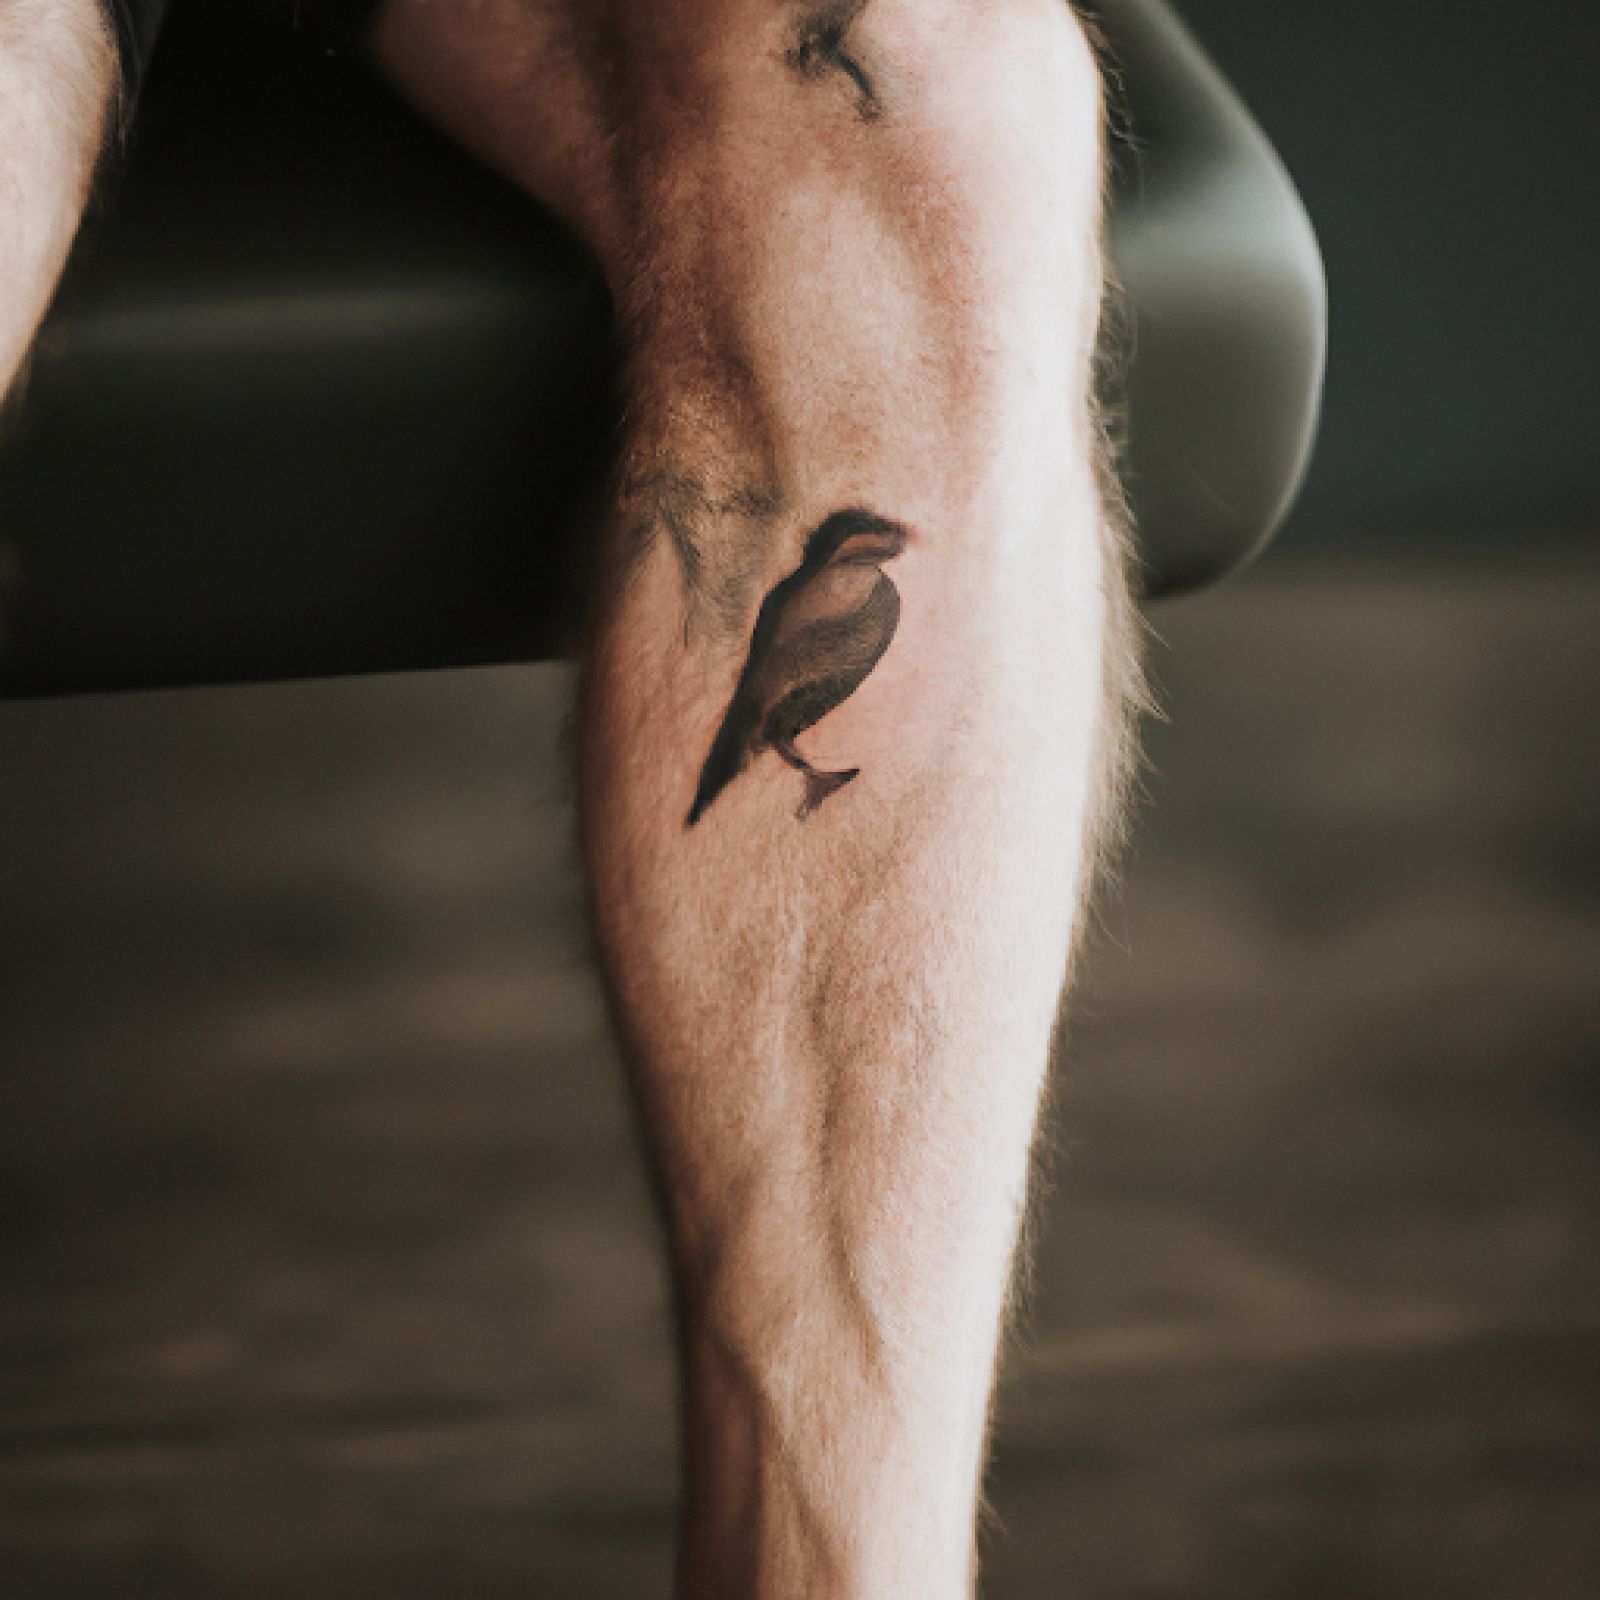 Bird tattoo on knee for men